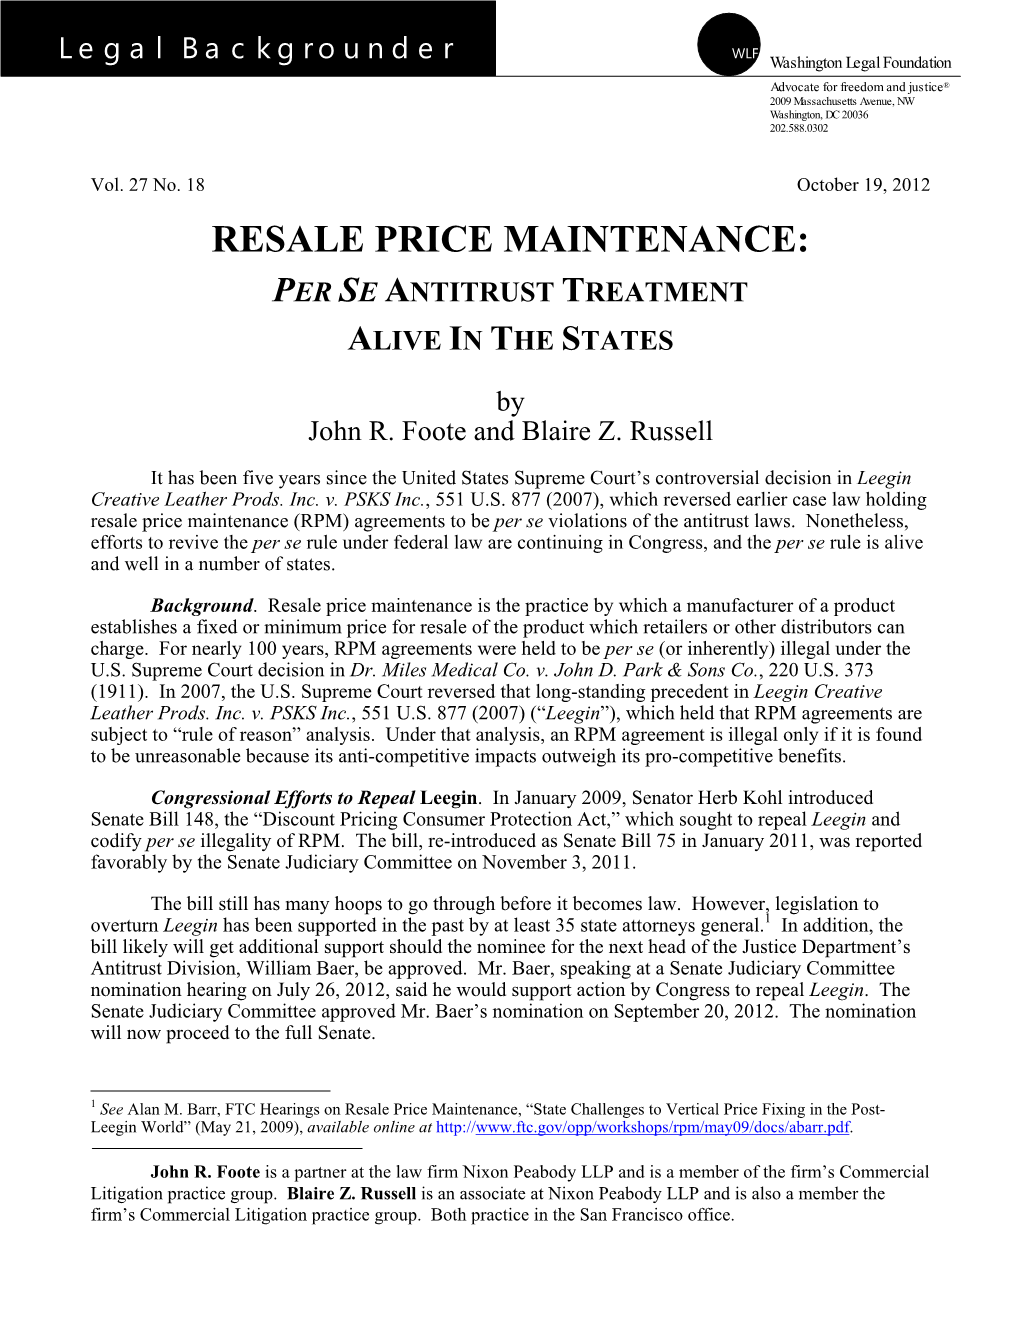 Resale Price Maintenance: Per Se Antitrust Treatment Alive in the States